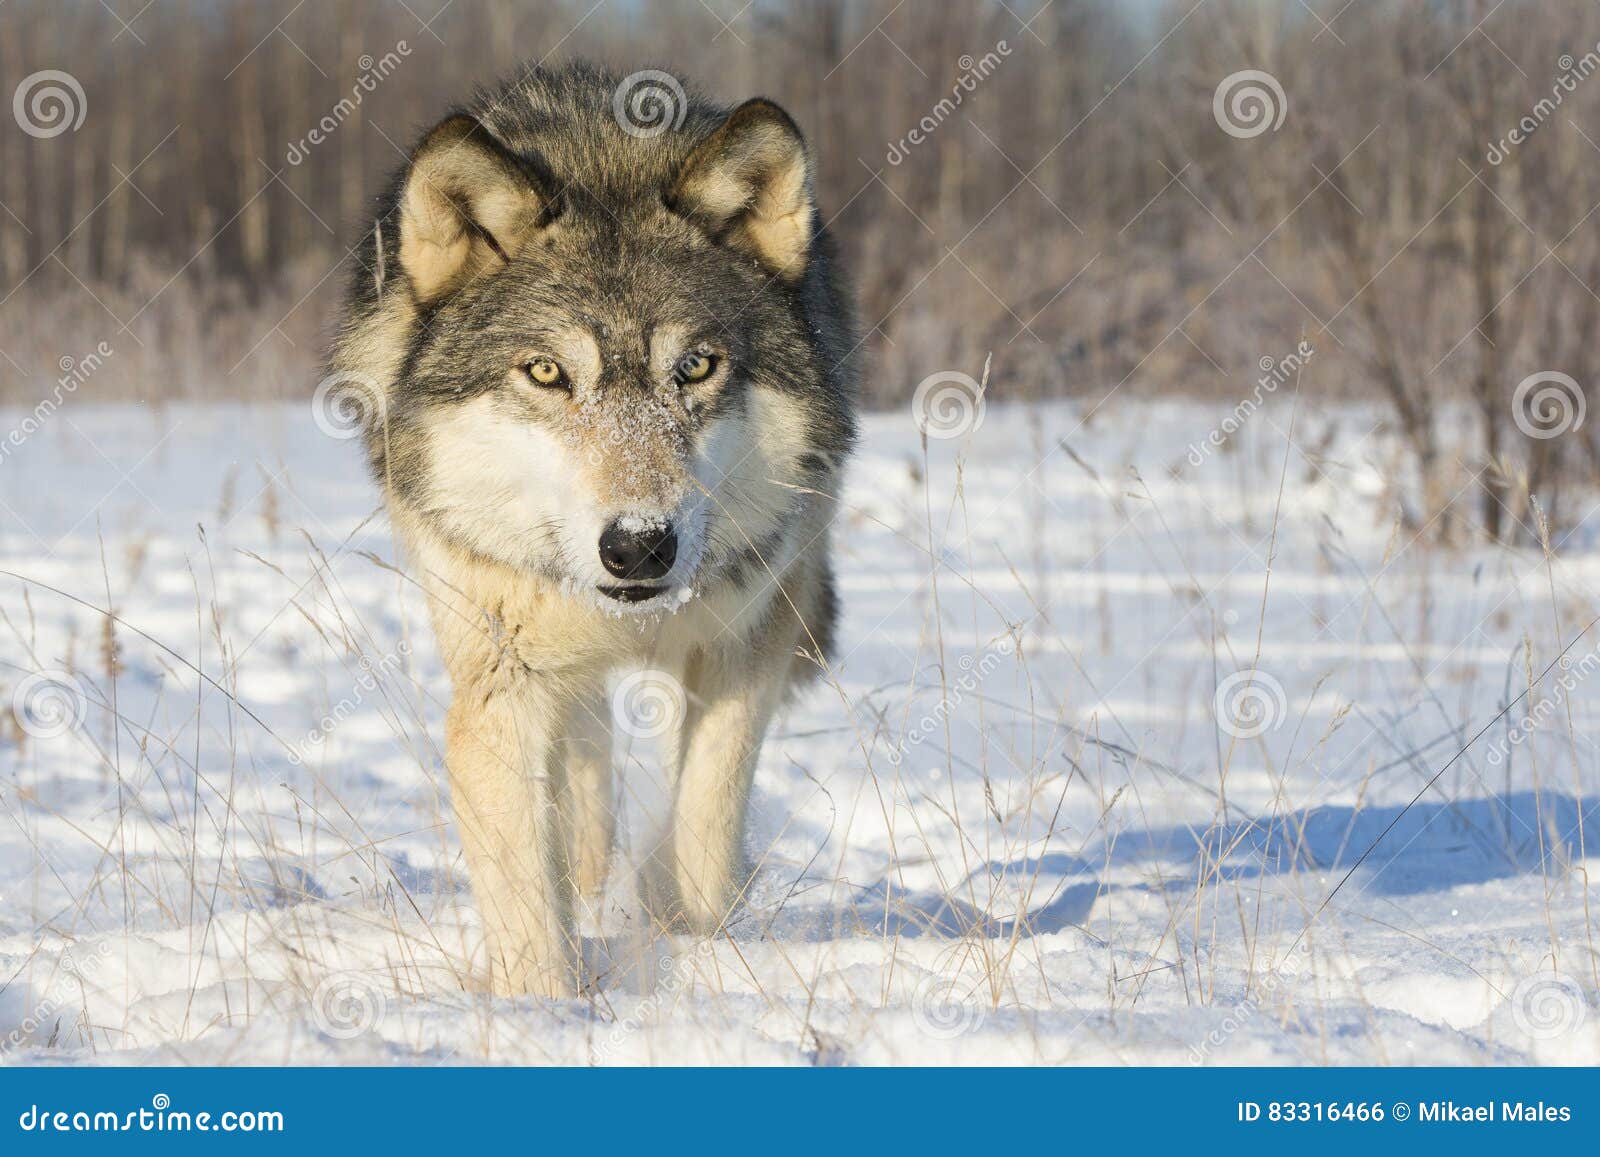 very intense gaze of timber wolf